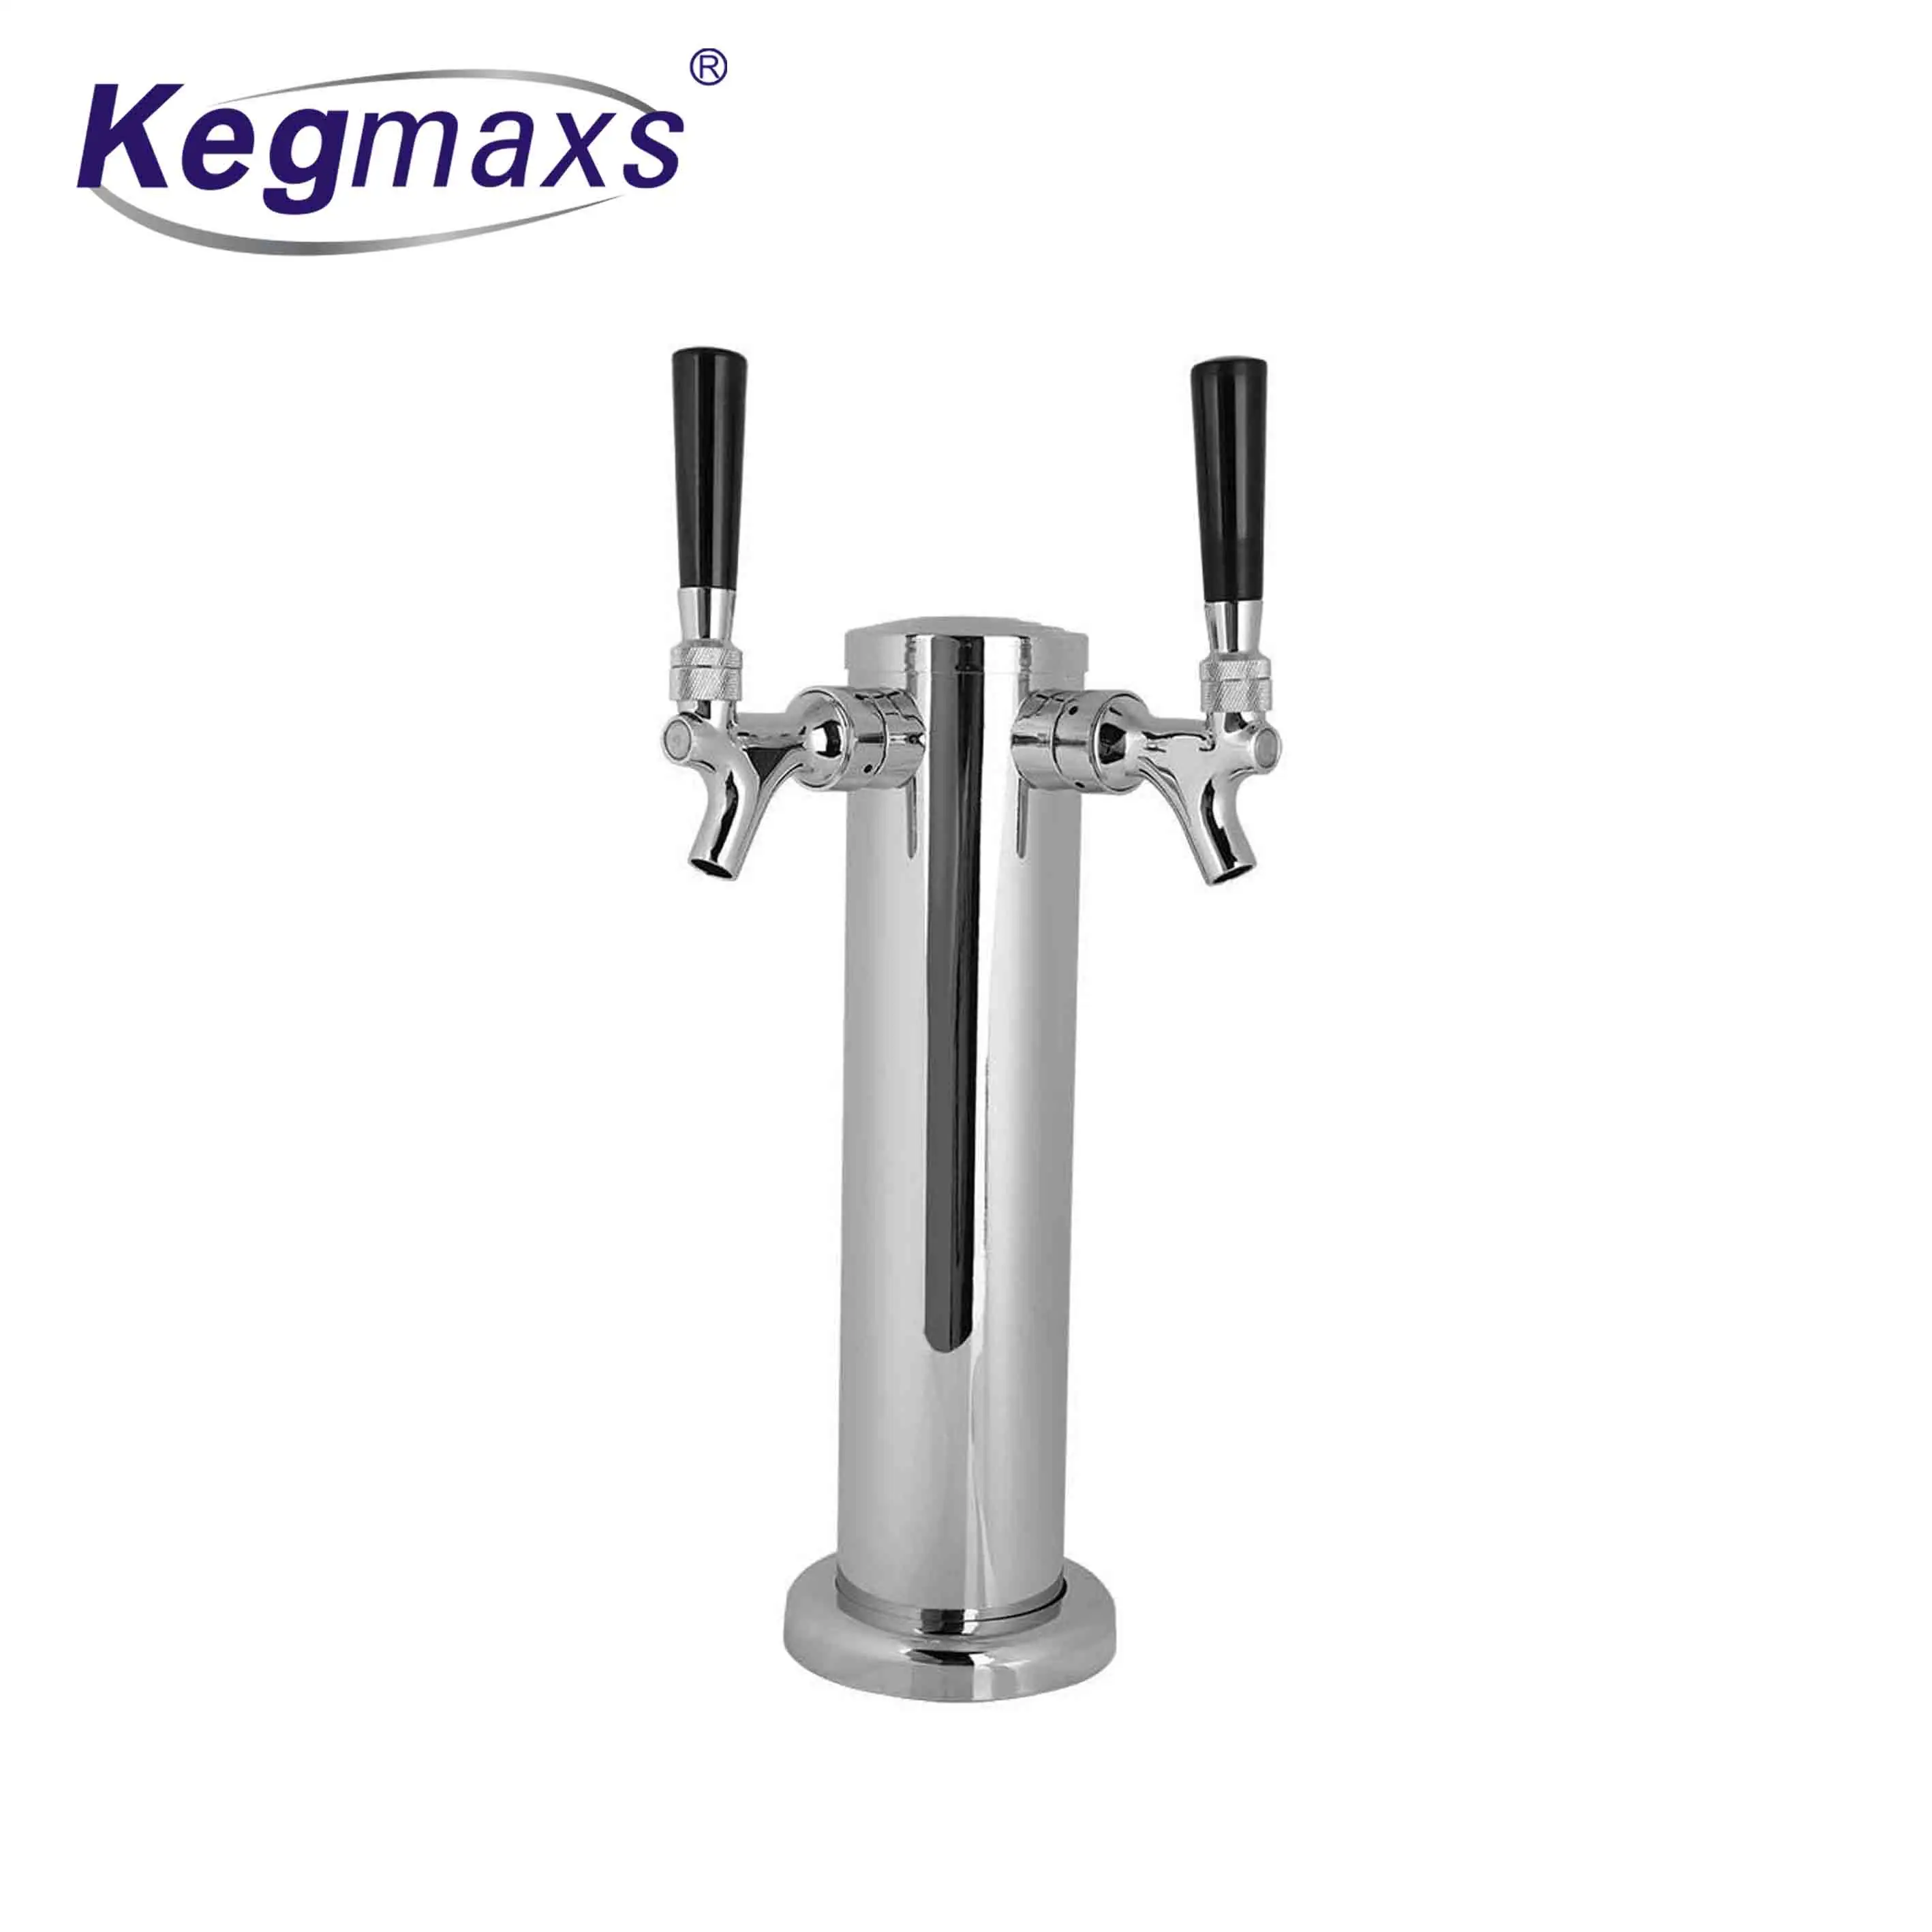 Kegmaxs Stainless Steel Beer Dispenser Draft Beer Kegerator Tower Kit with Faucet Double Tap 2 Hose Beer Tower Set